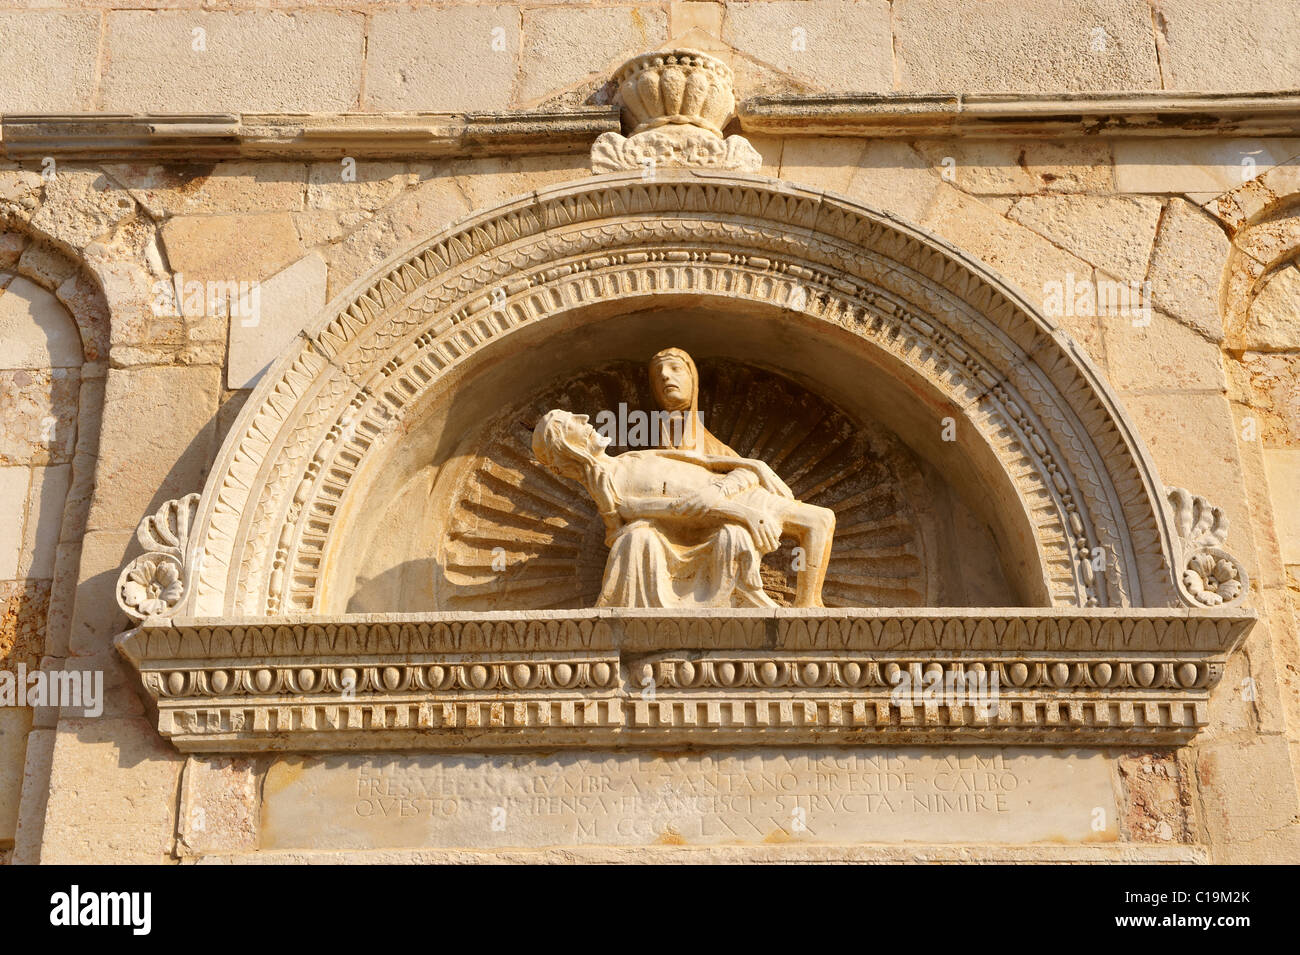 Die romanische Toskanischen Fassade der Kathedrale der Hl. Maria die Große (Crkva svete Marije Velike) Rab, Insel Rab, Kroatien Stockfoto